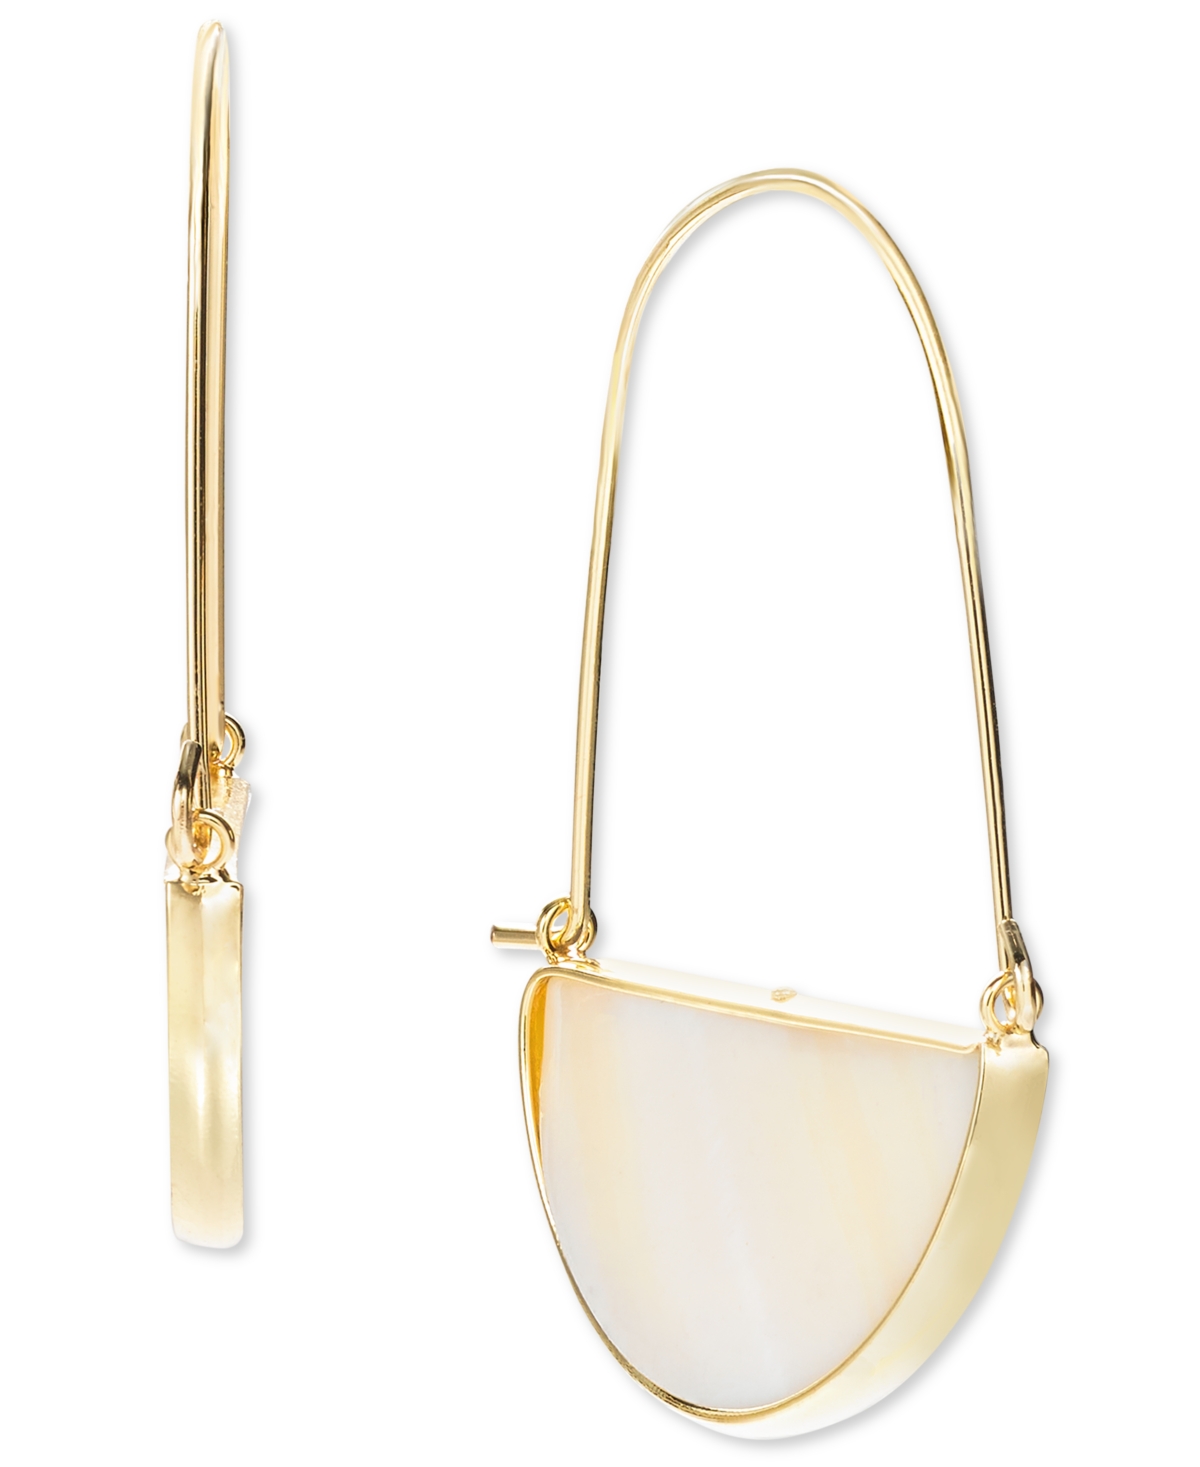 Gold-Tone Half Circle Stone Earrings, Created for Macy's - White